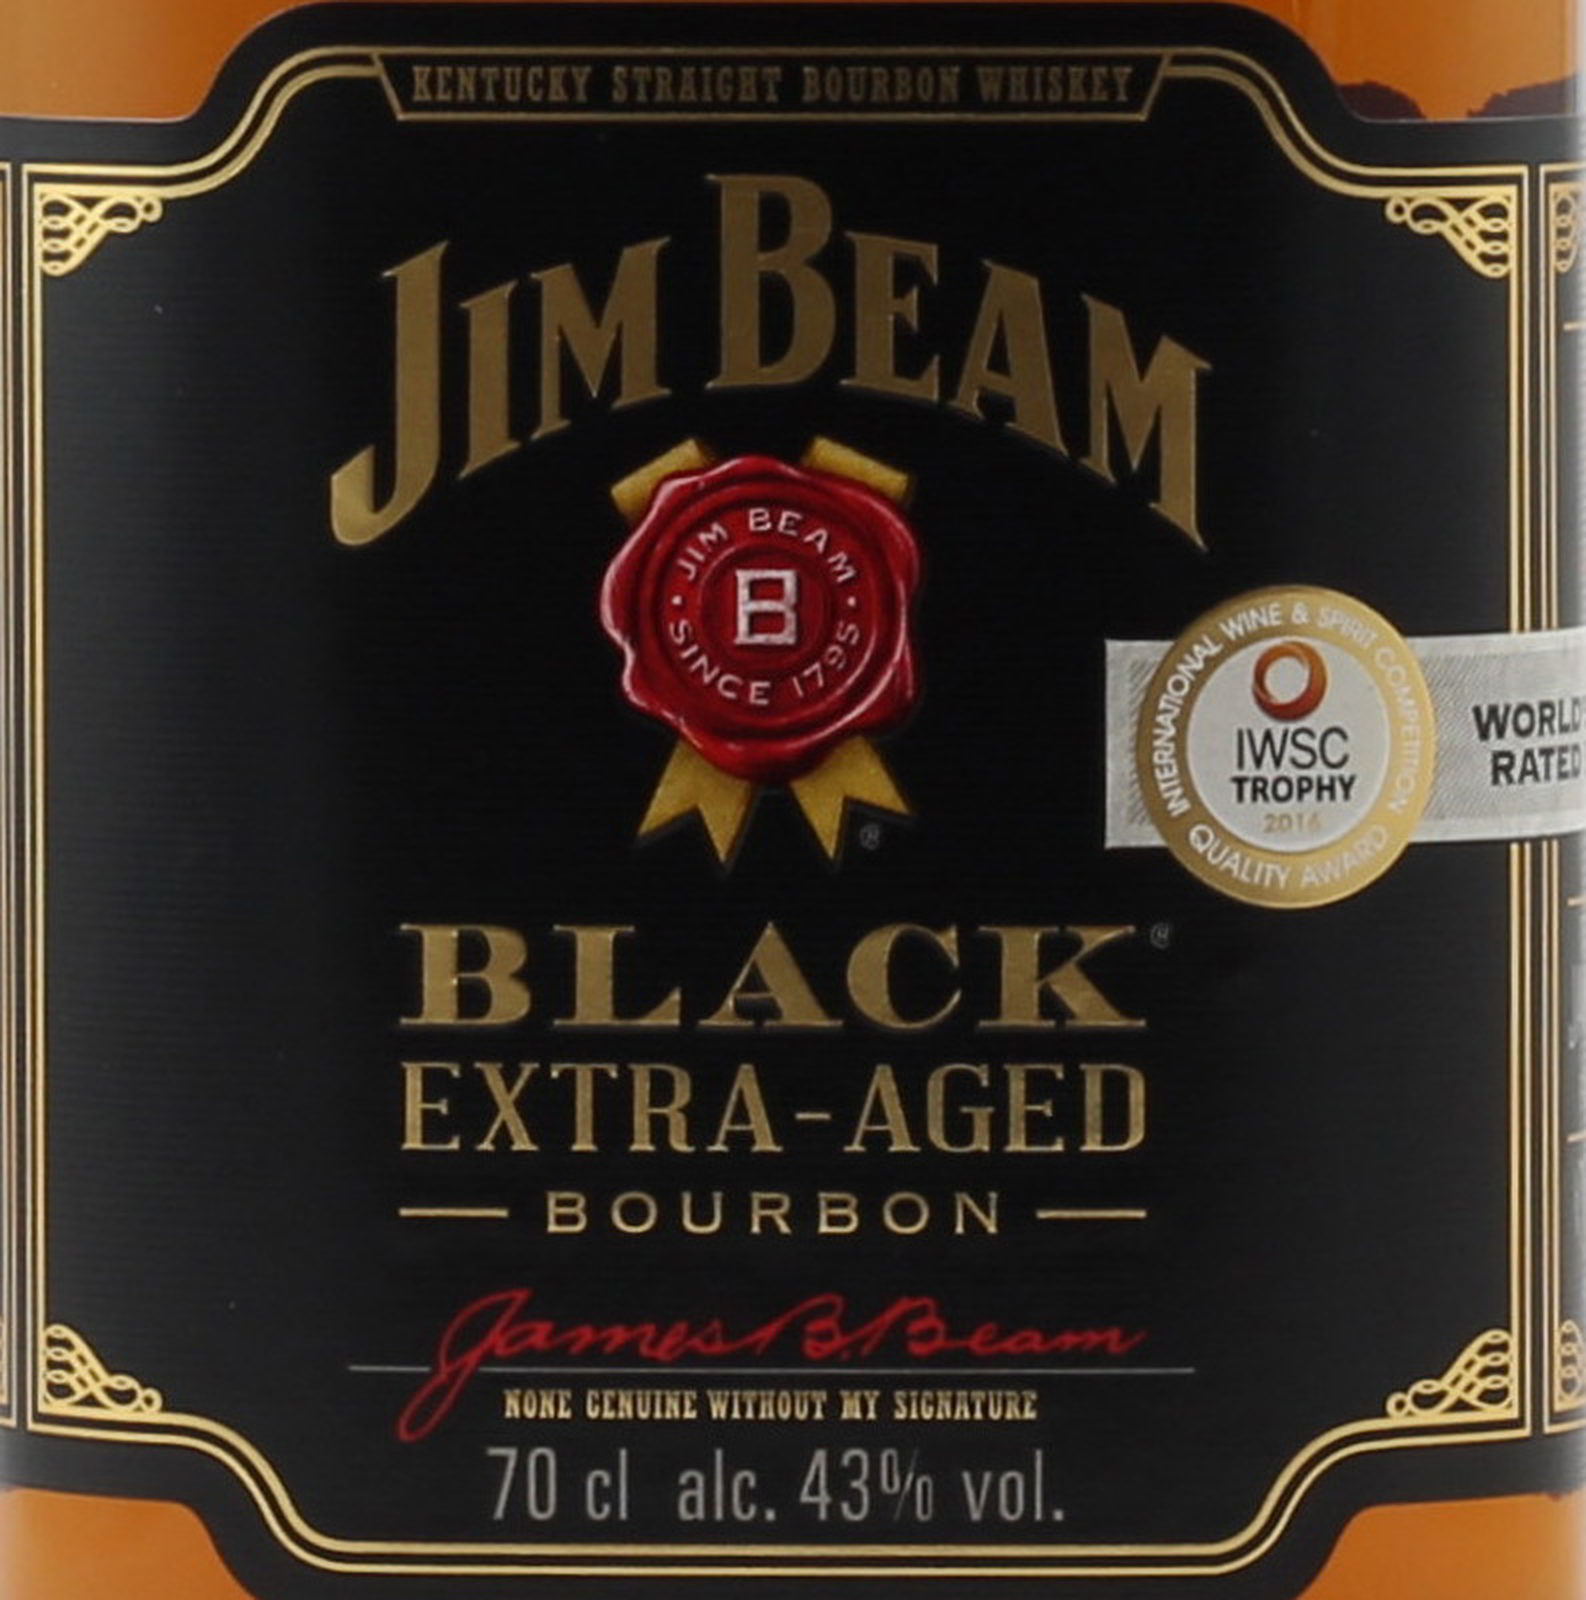 [Beliebter Artikel! ] Jim Beam % 0,7 Extra Black Vol., Liter 43 preisgek Aged